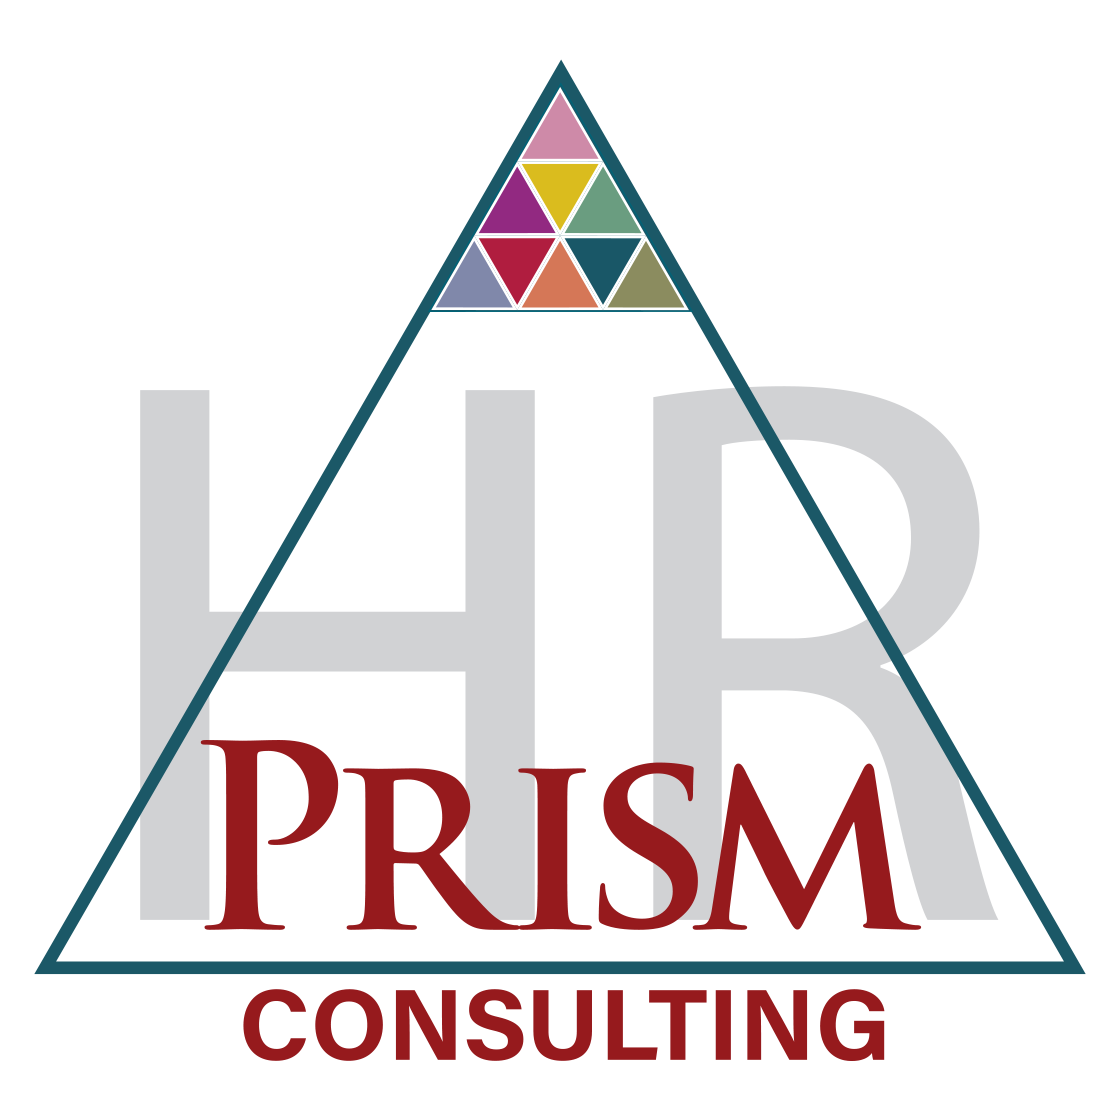 Prism HR Consulting